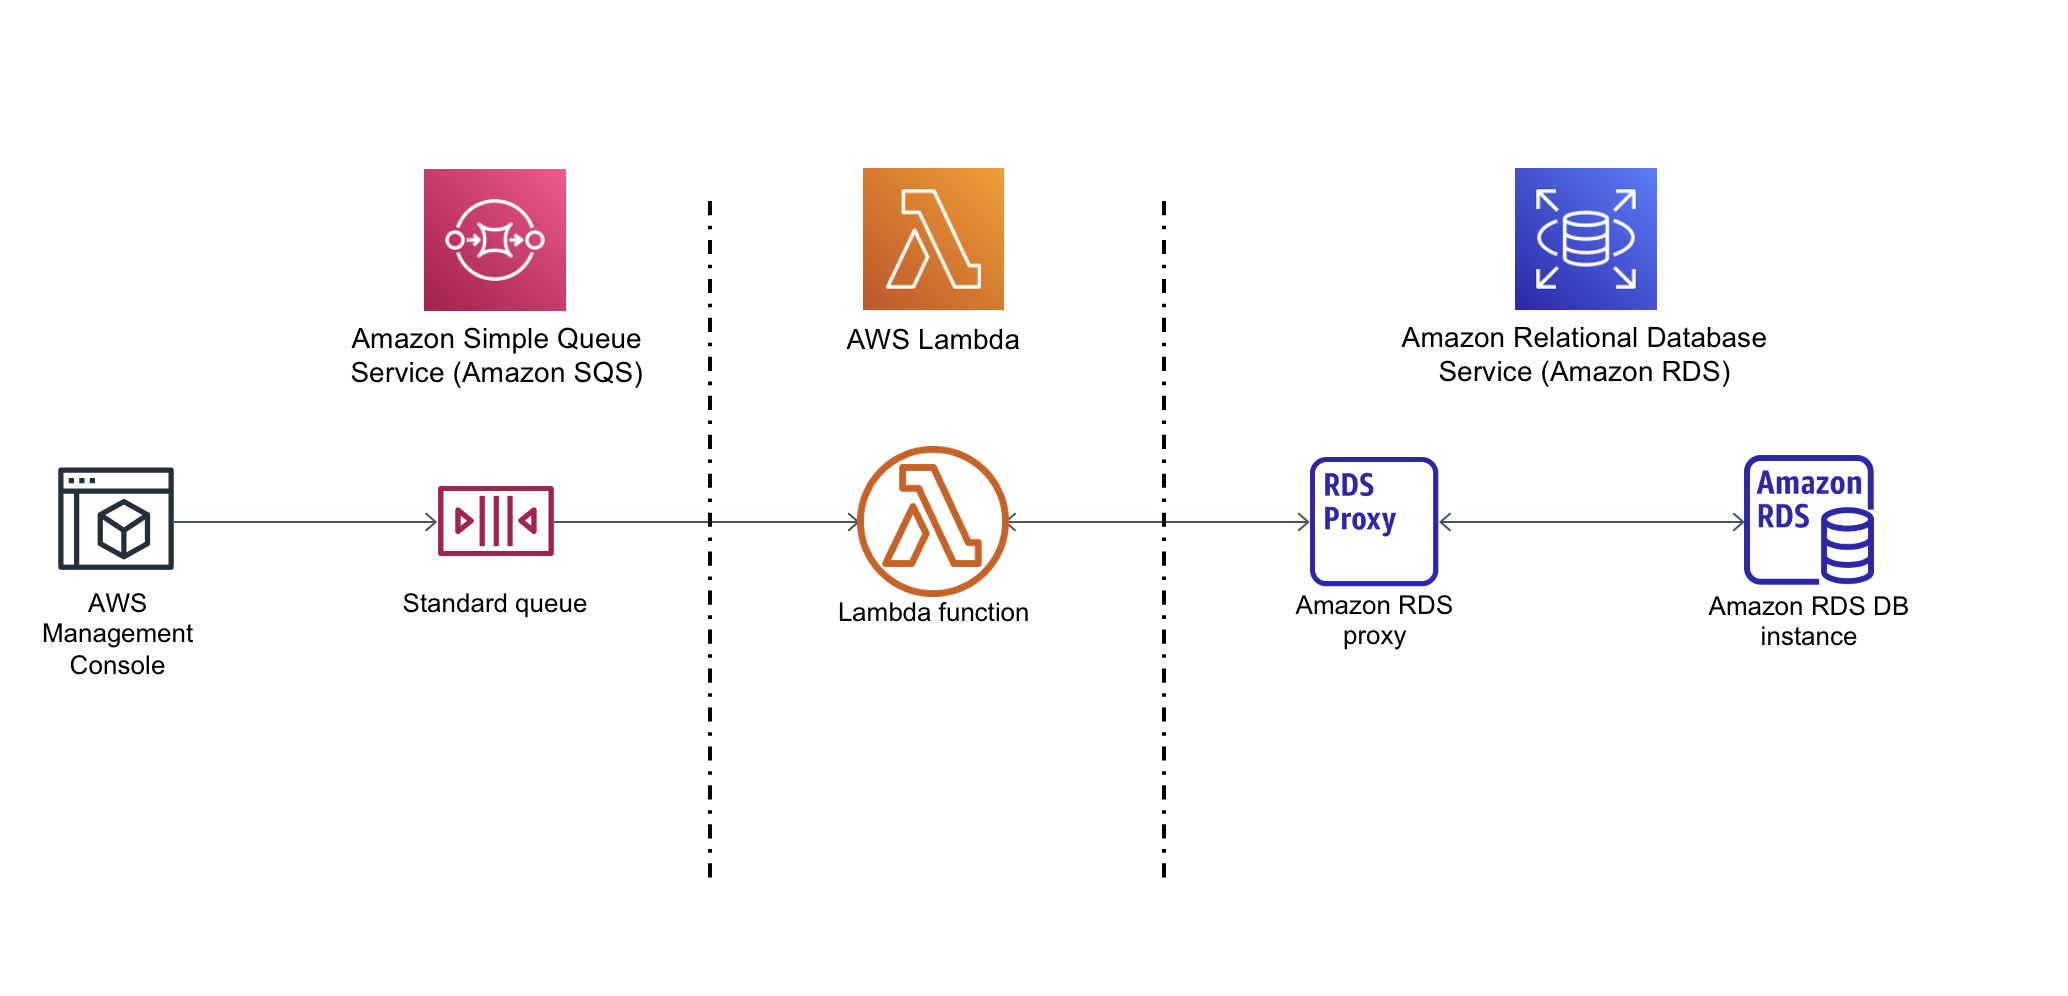 AWS Management Console 連線至 Amazon SQS 標準佇列的執行個體，該佇列會連線至 Lambda 函數，該函數會透過 RDS 代理伺服器進一步連線至適用於 MySQL 的 RDS 資料庫。